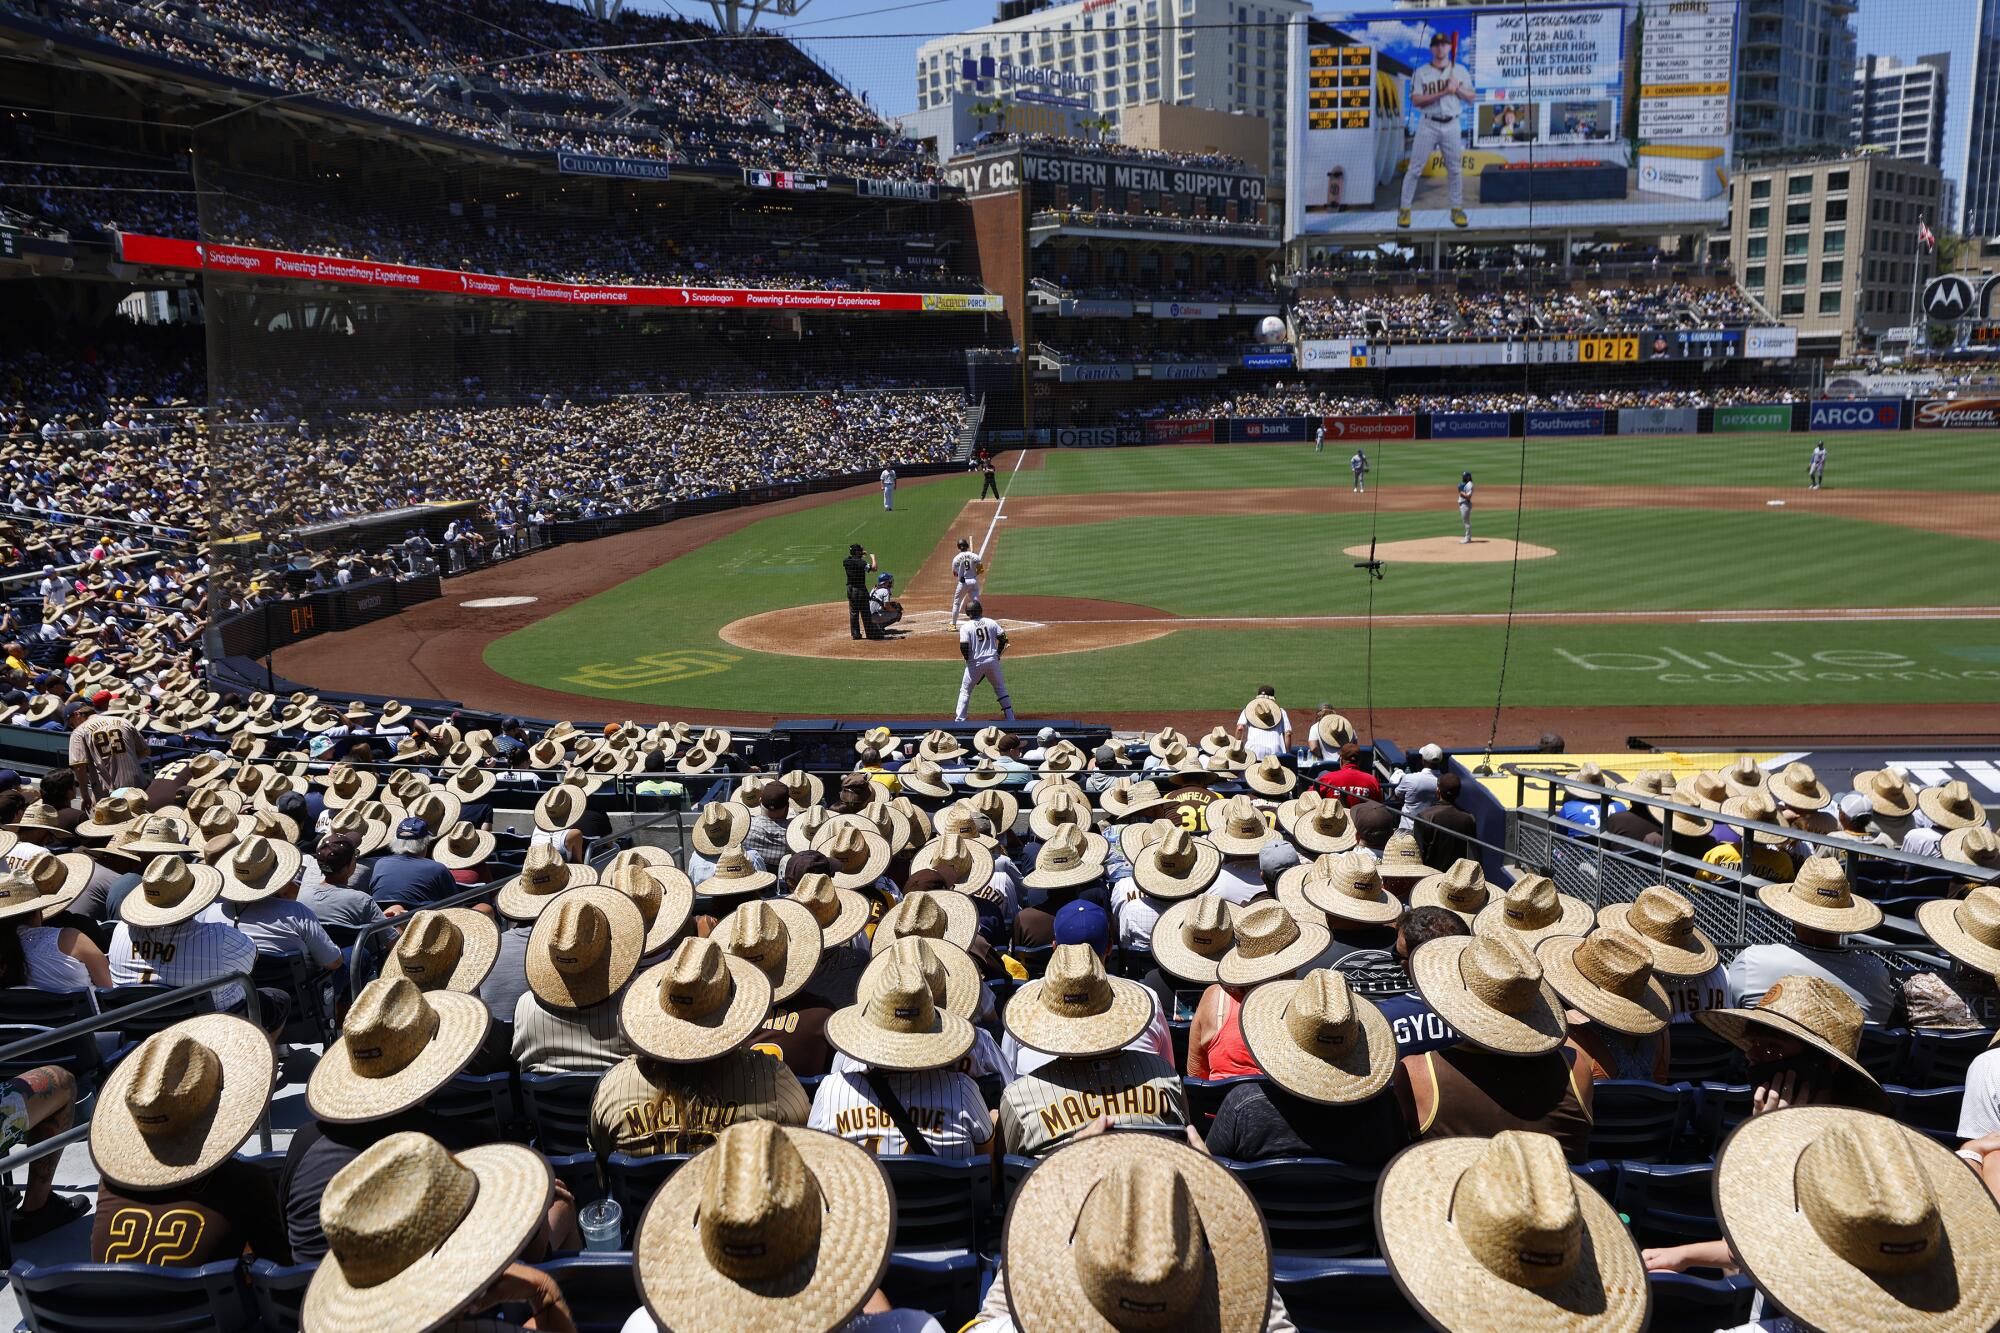 Plenty of Dodgers fans in San Diego County! Love it! : r/Dodgers